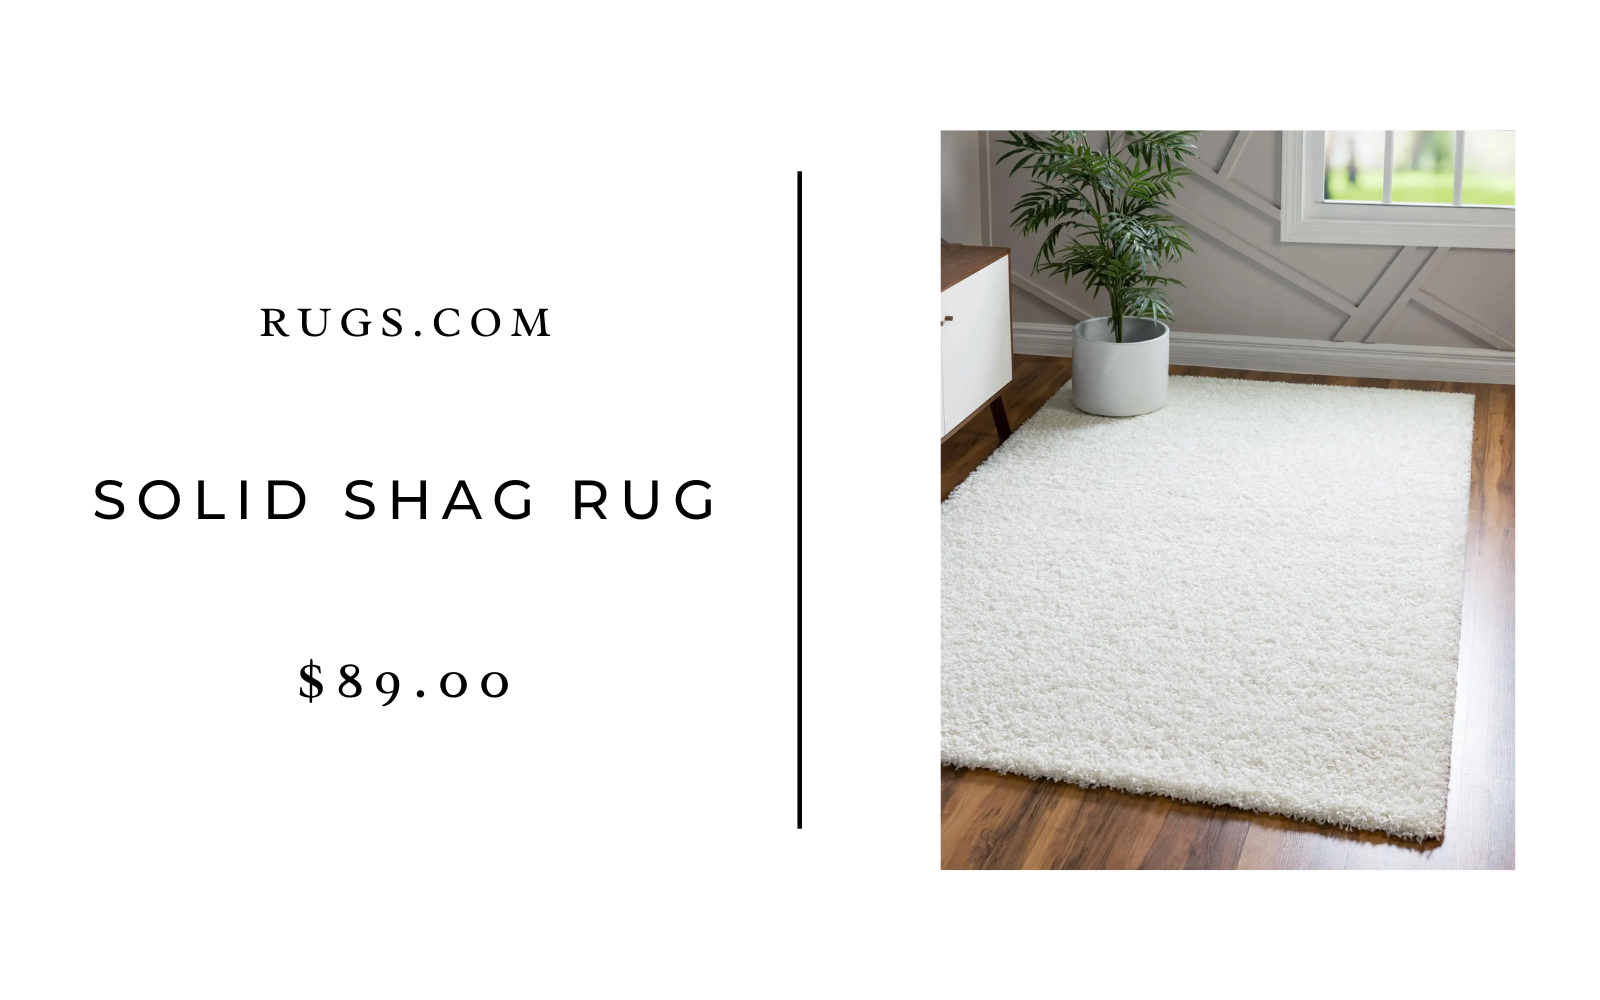 rugs.com shag rug